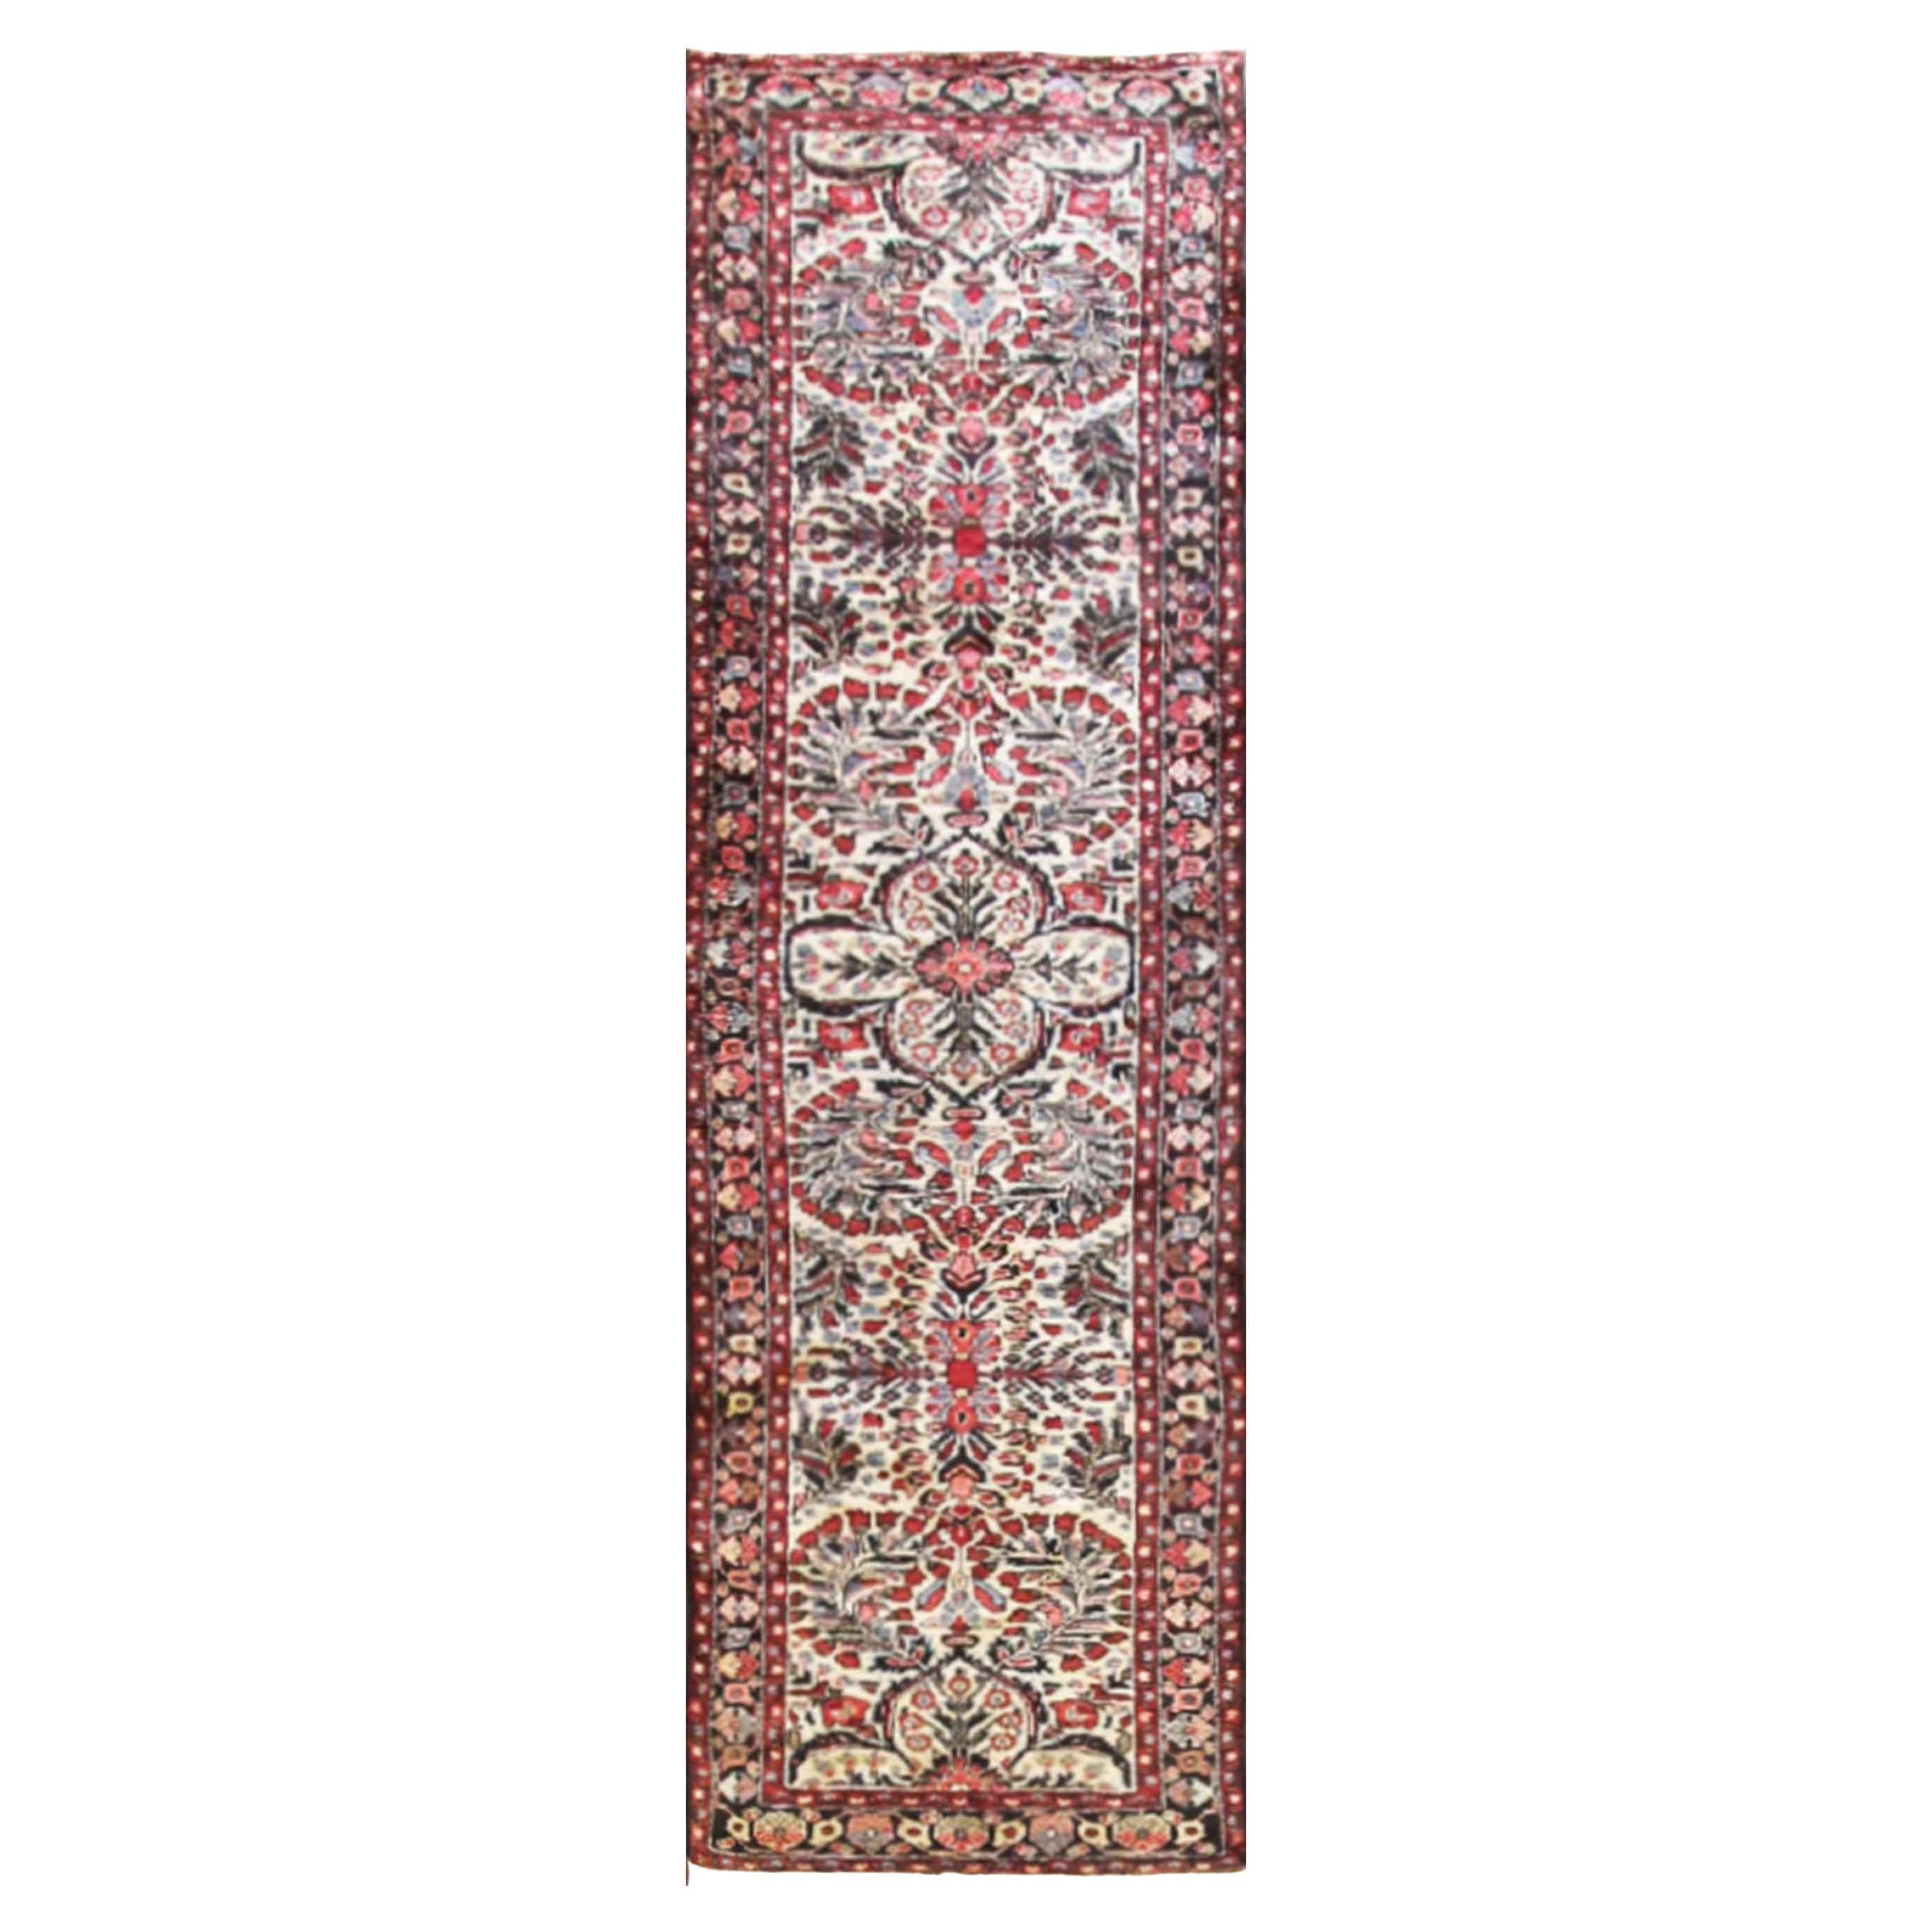 Antique Persian Lilihan/Sarouk Runner, Ivory Color 2'8" x 9'8" For Sale